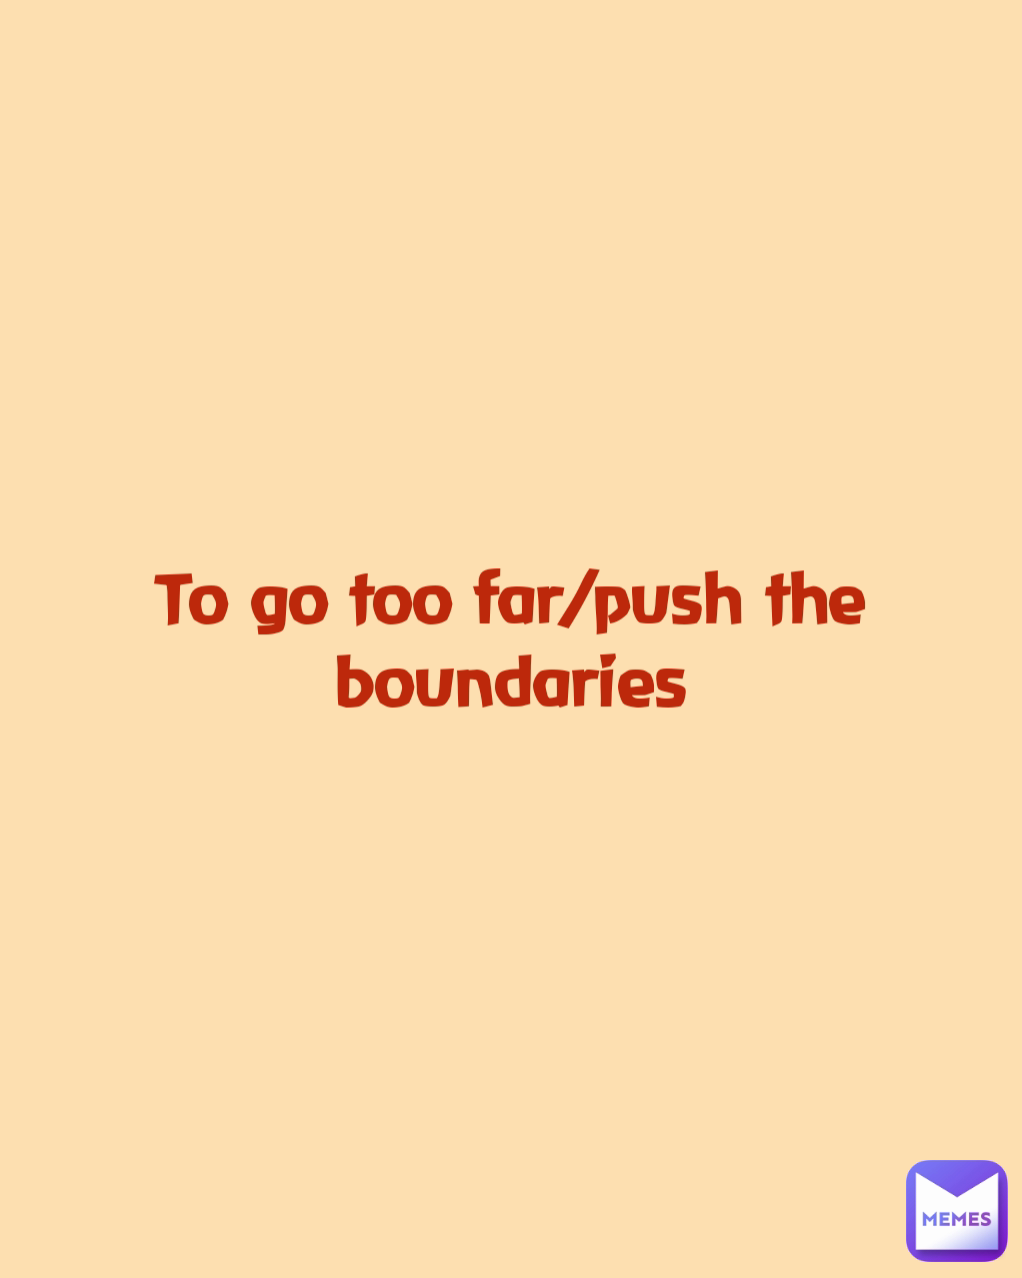 To go too far/push the boundaries